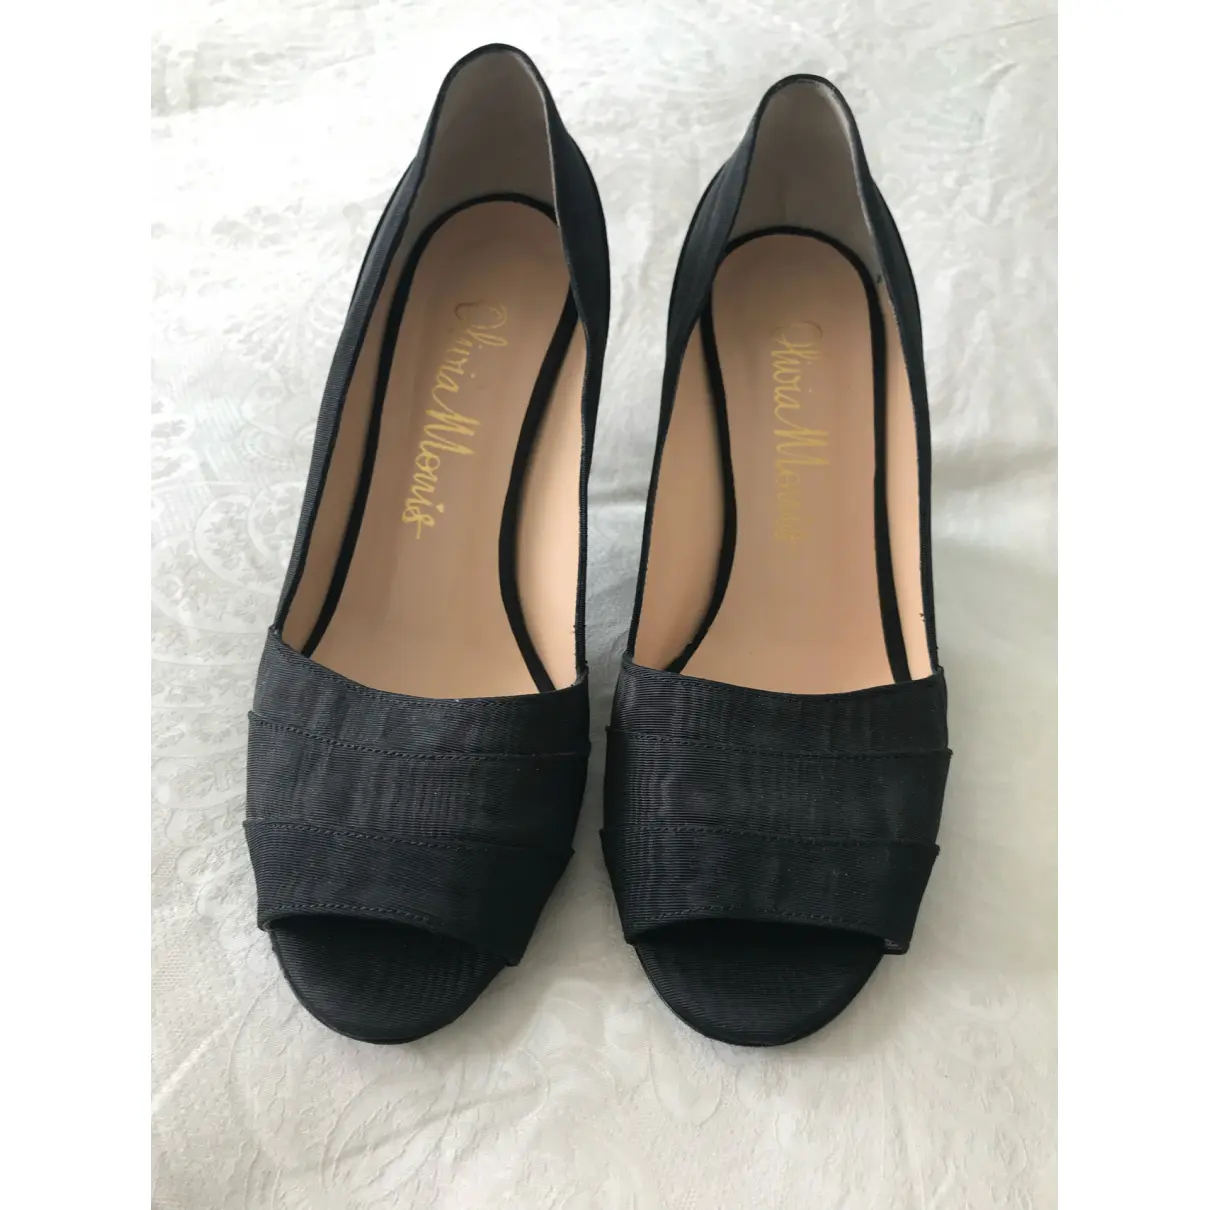 Buy Olivia Morris Shoes Cloth heels online